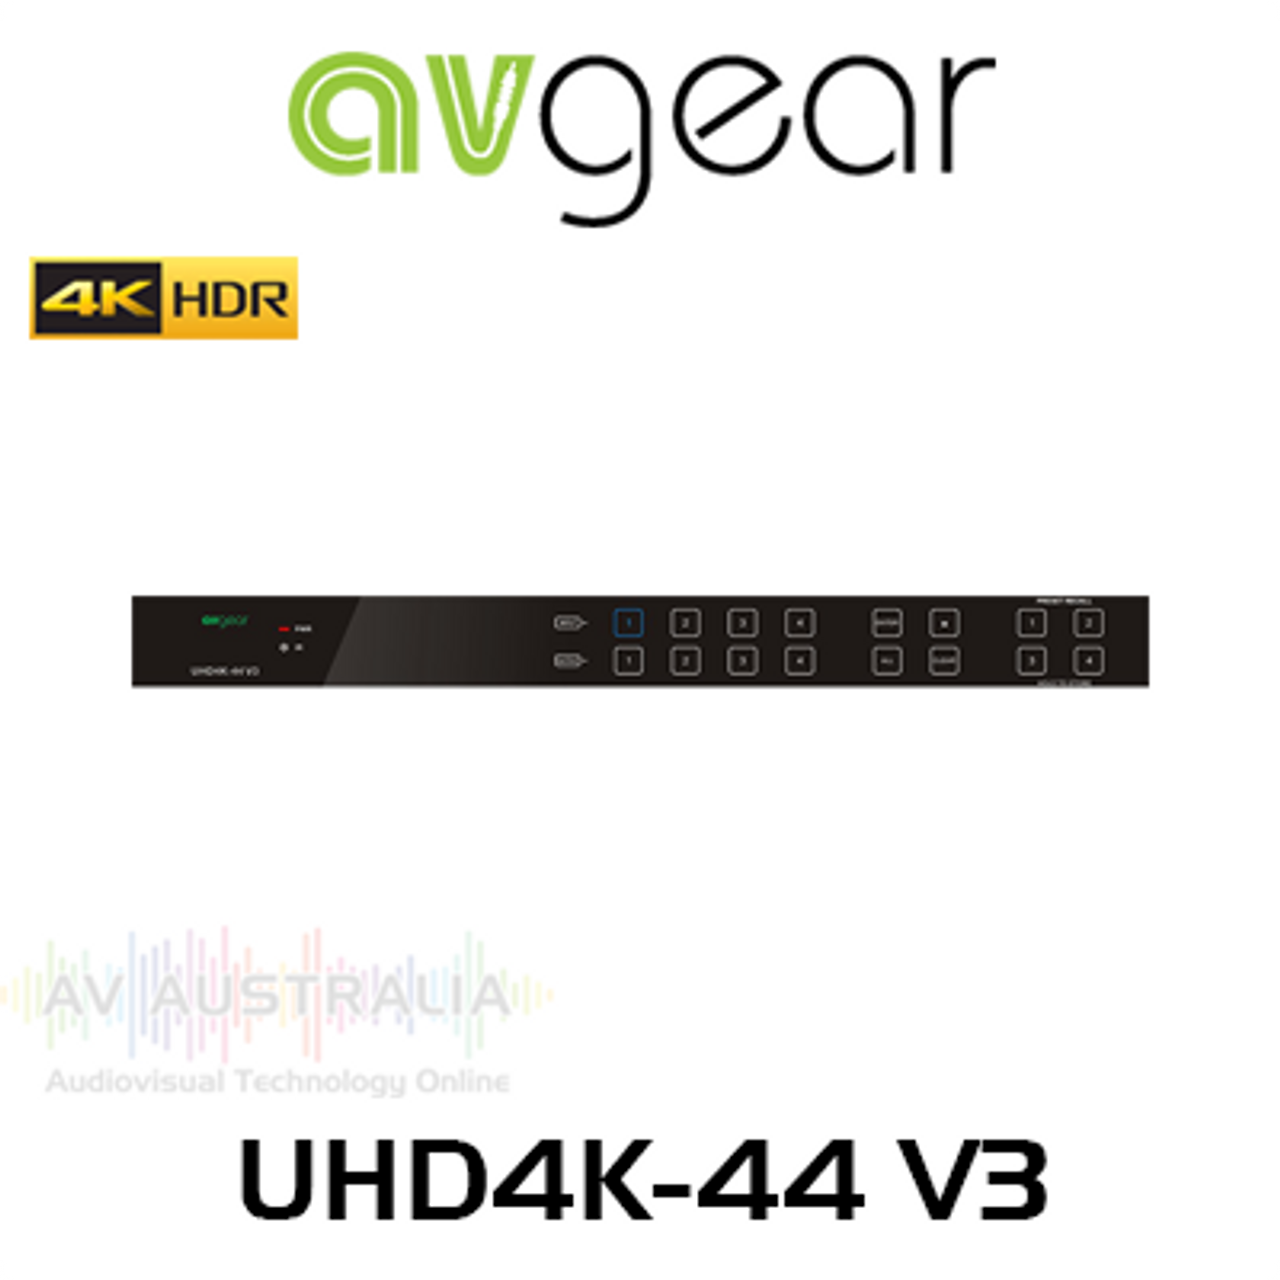 AVGear UHD4K-44 V3 4K 4x4 HDMI 2.0 Matrix Switcher with Audio Matrix